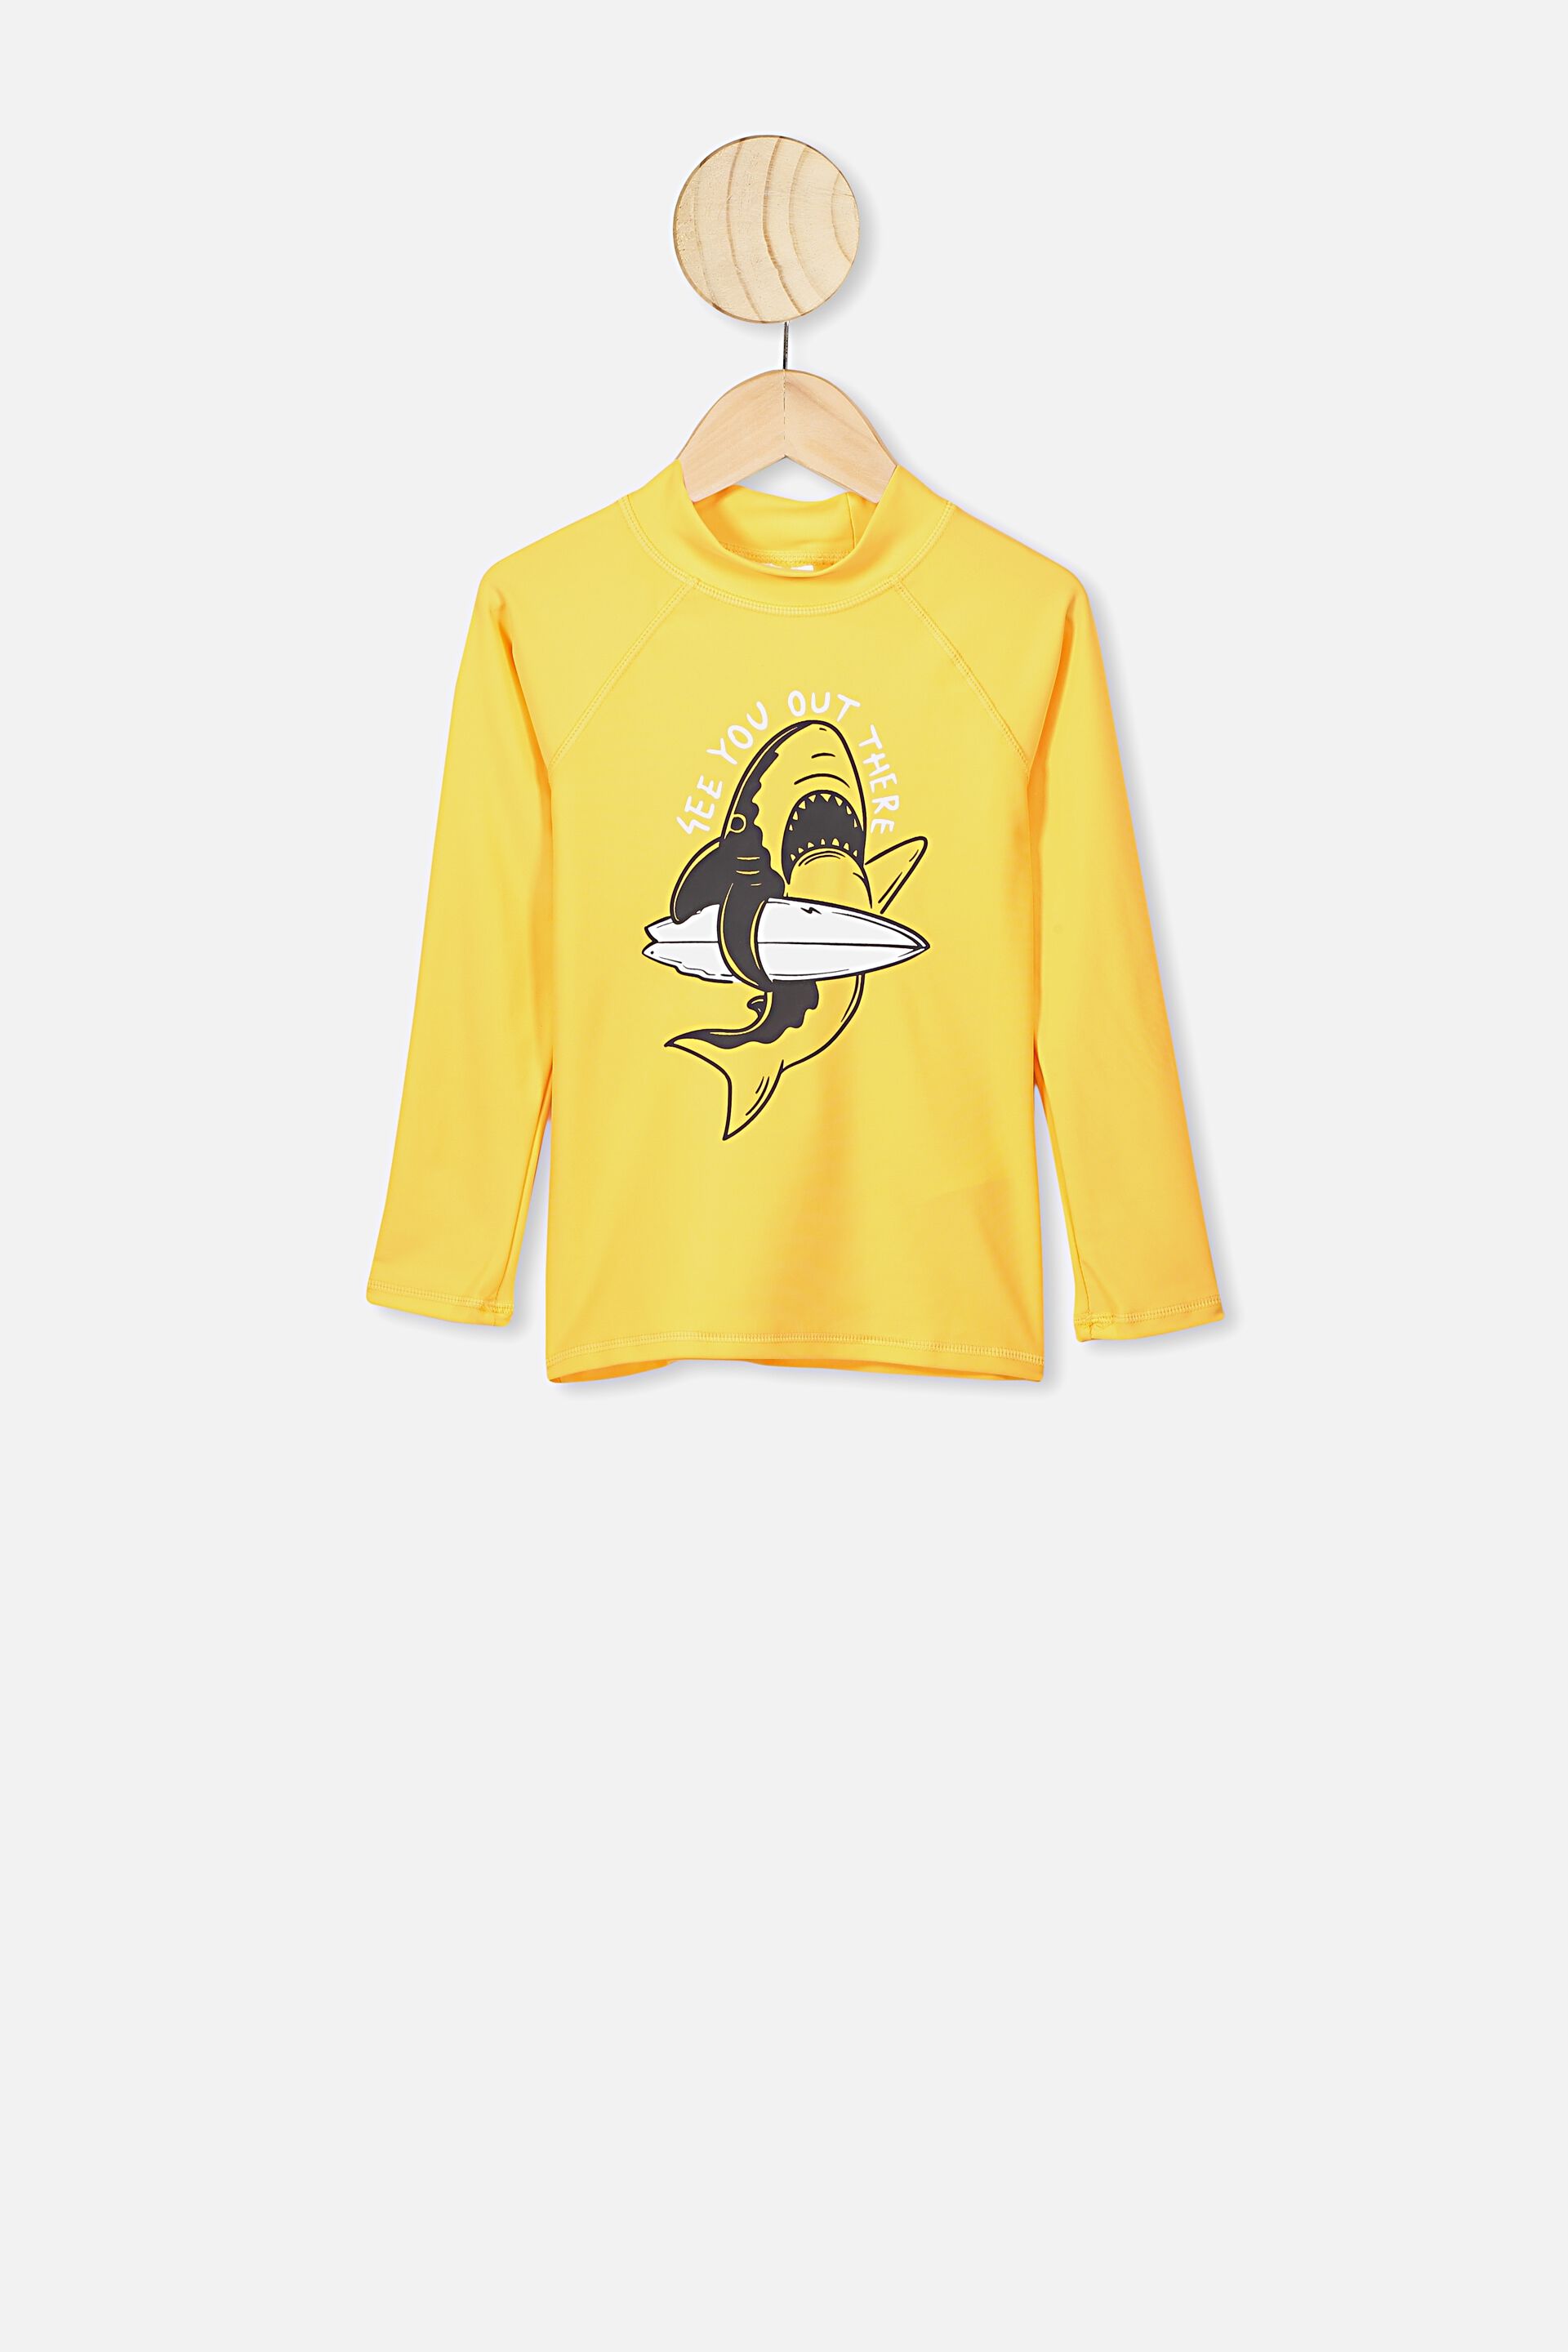 sharks yellow jersey